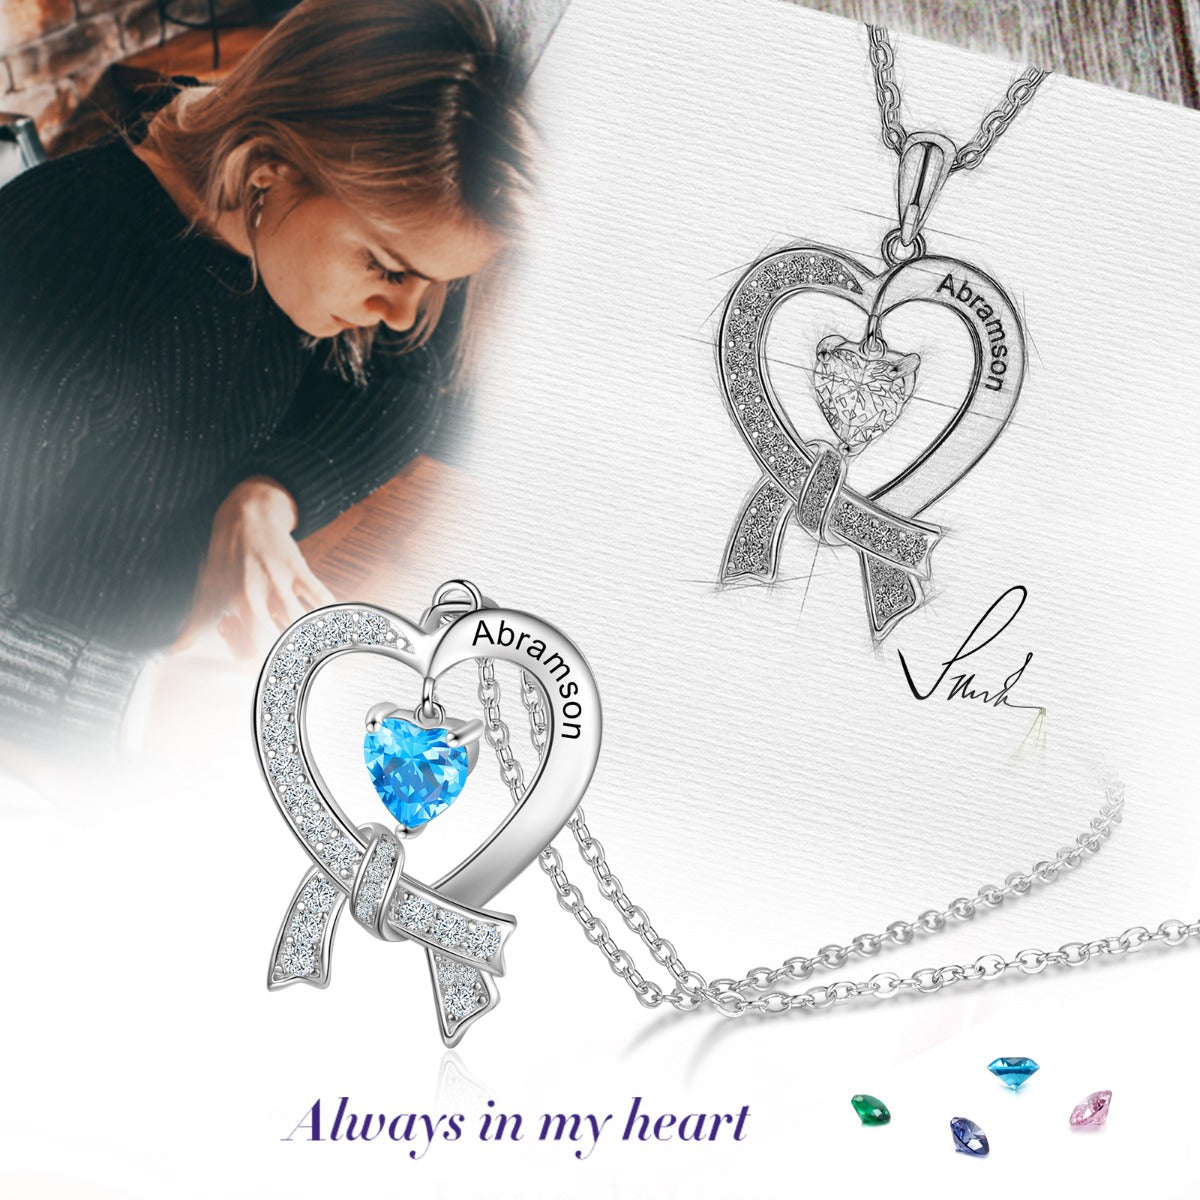 Heart Shape Pendant Necklace 1 to 2 Stones